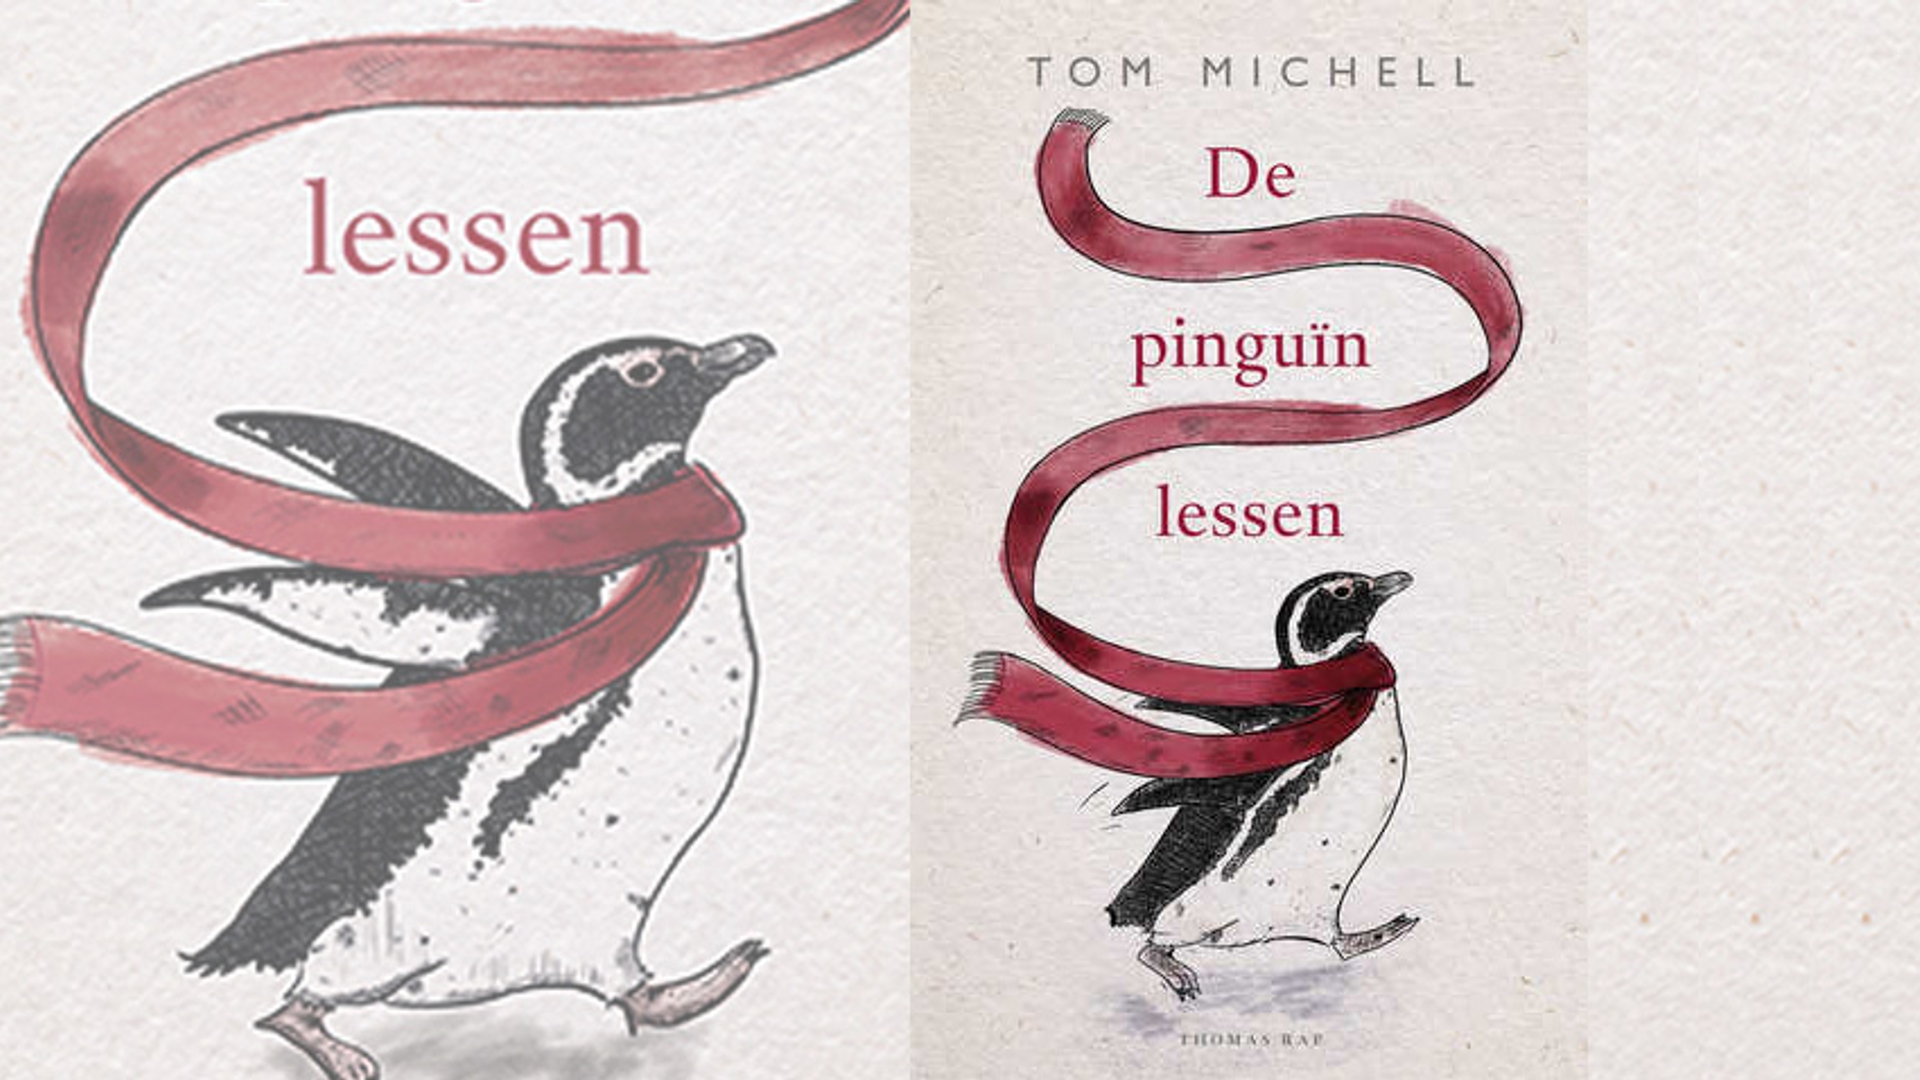 Boek: De pinguin lessen - Tom Michell